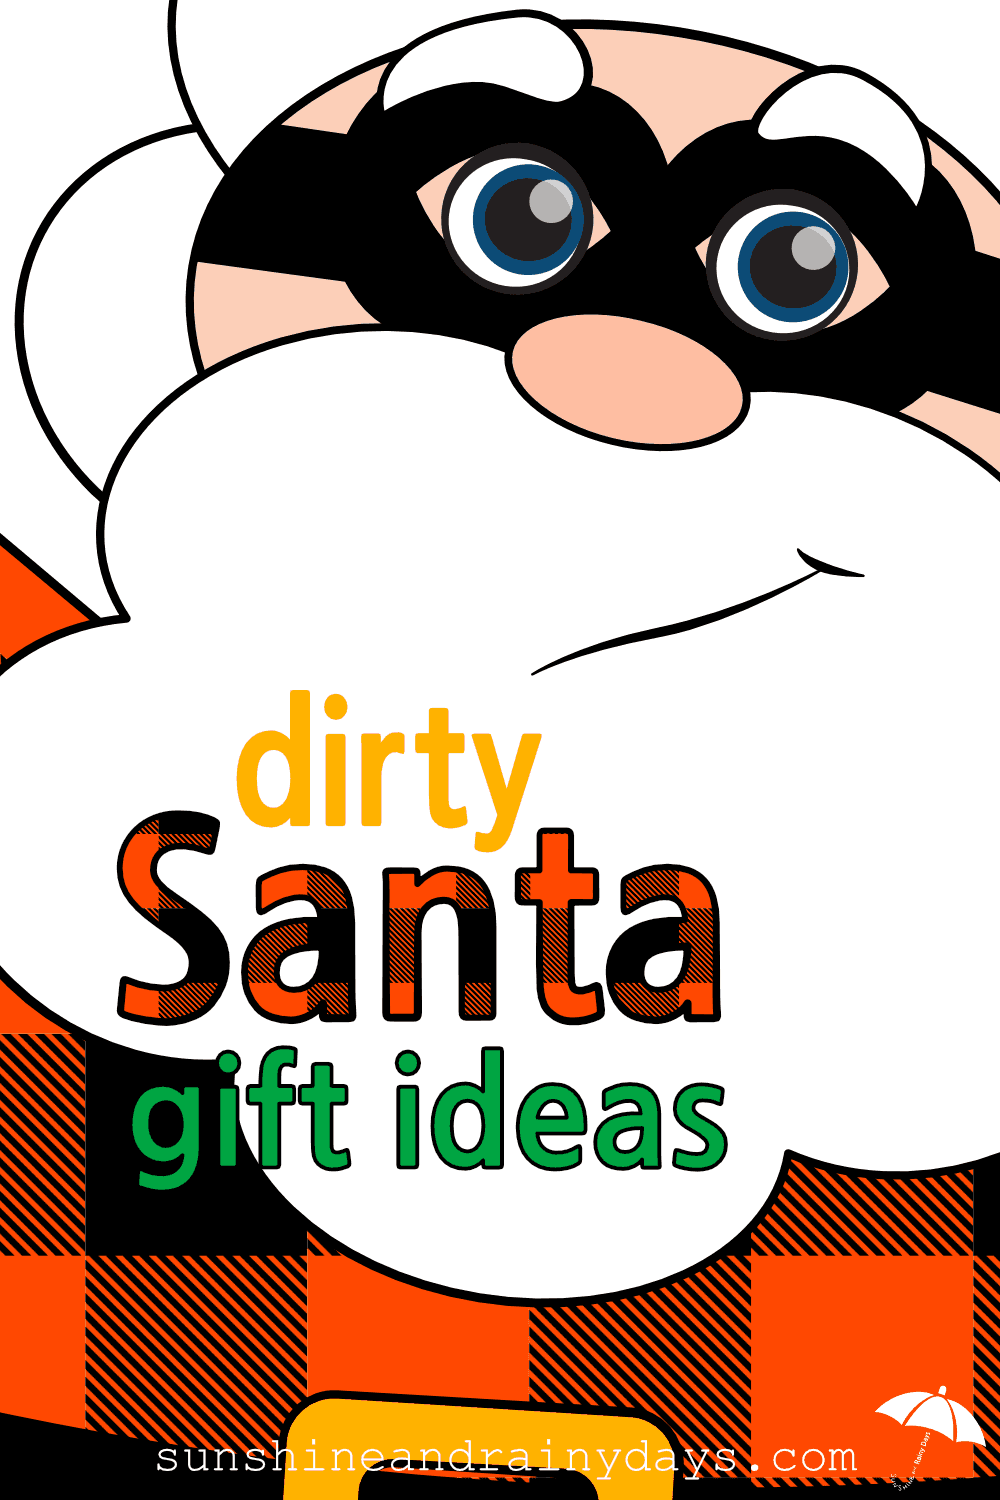 Dirty Santa Gift Ideas - Sunshine and Rainy Days